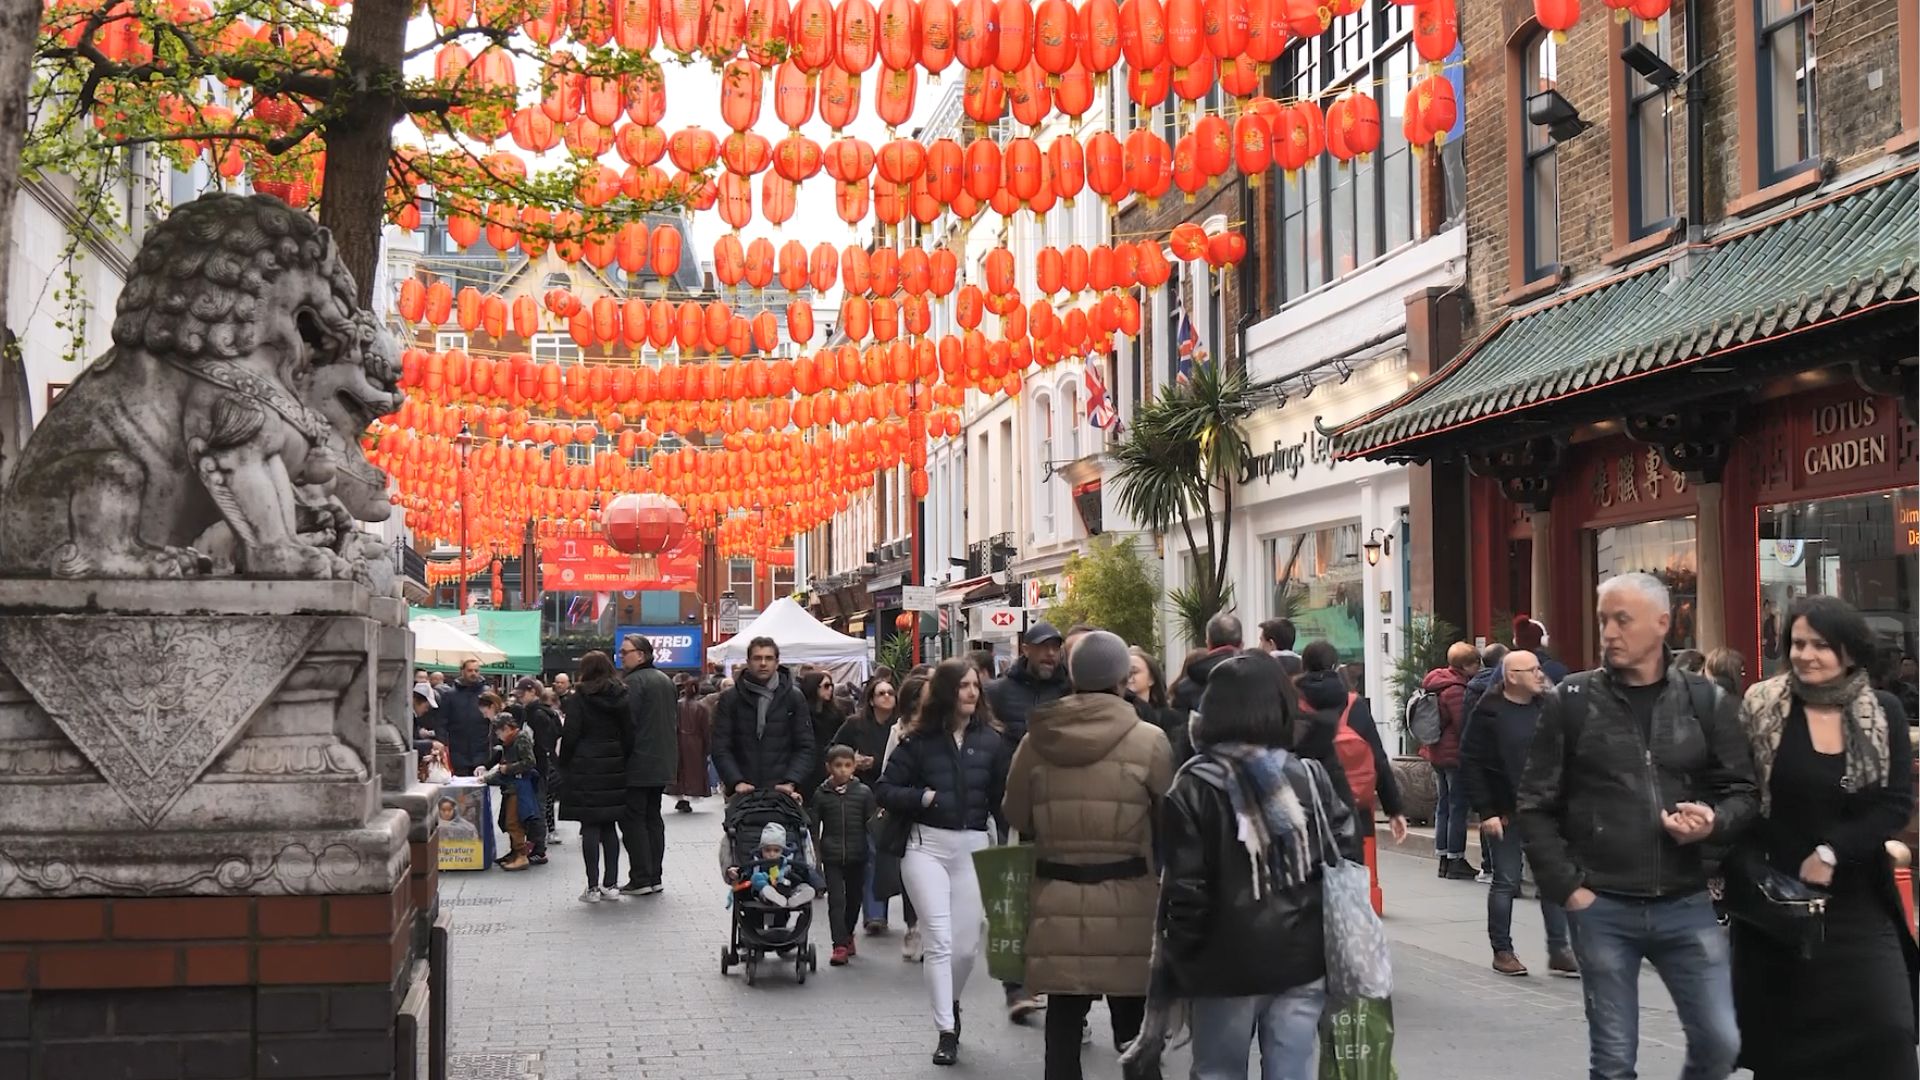 London's Chinatown celebrates Chinese cuisine. /CGTN